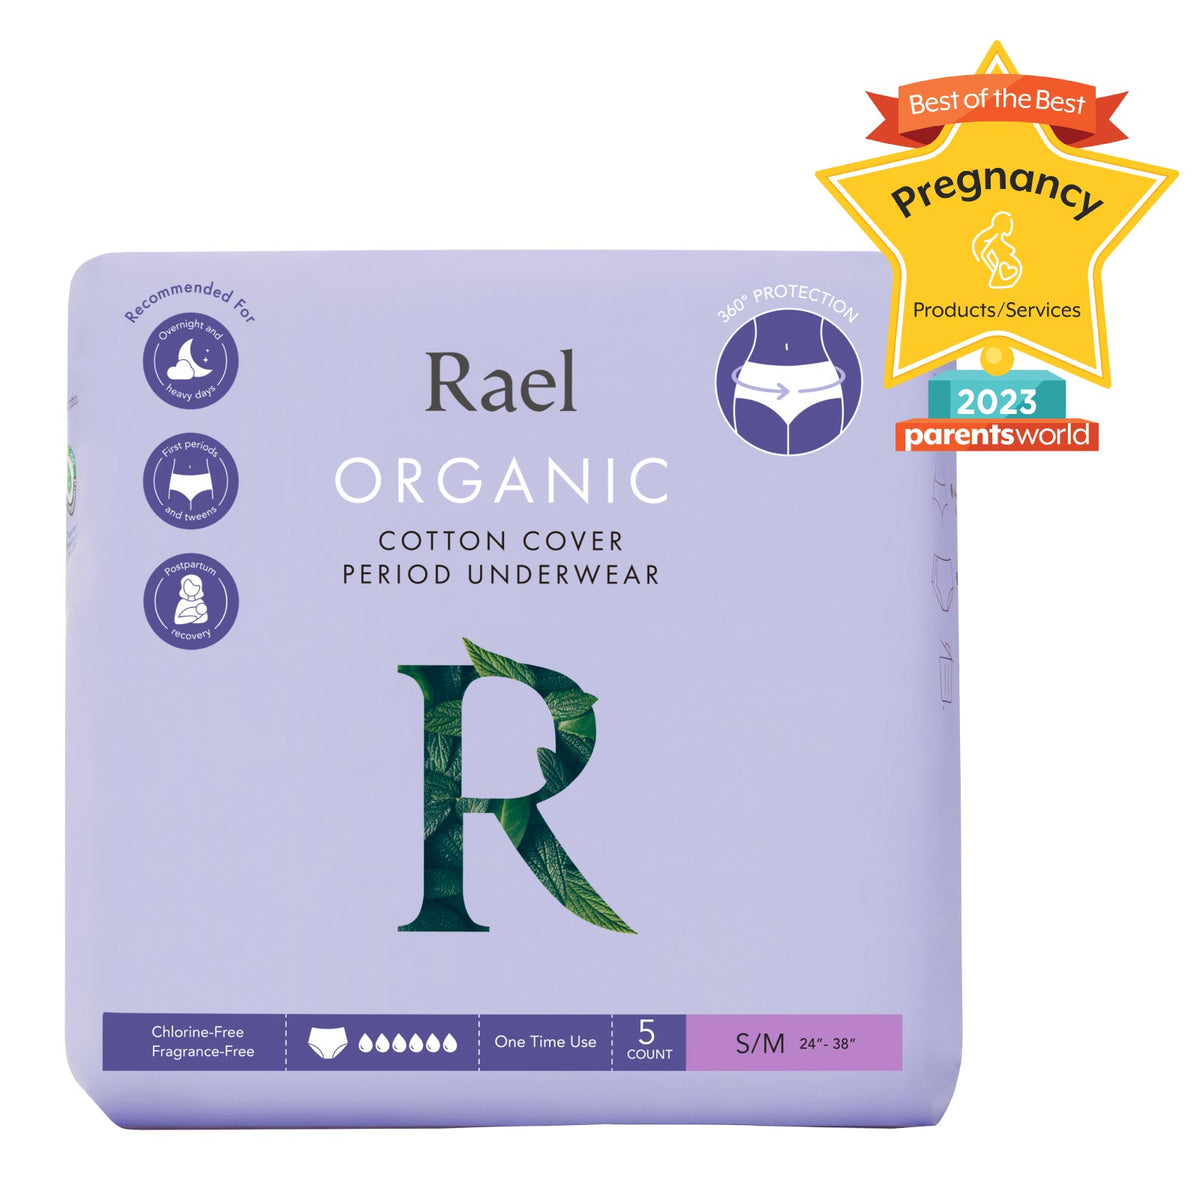 Rael Organic Cotton Cover Period Underwear 10 Count (S/M)